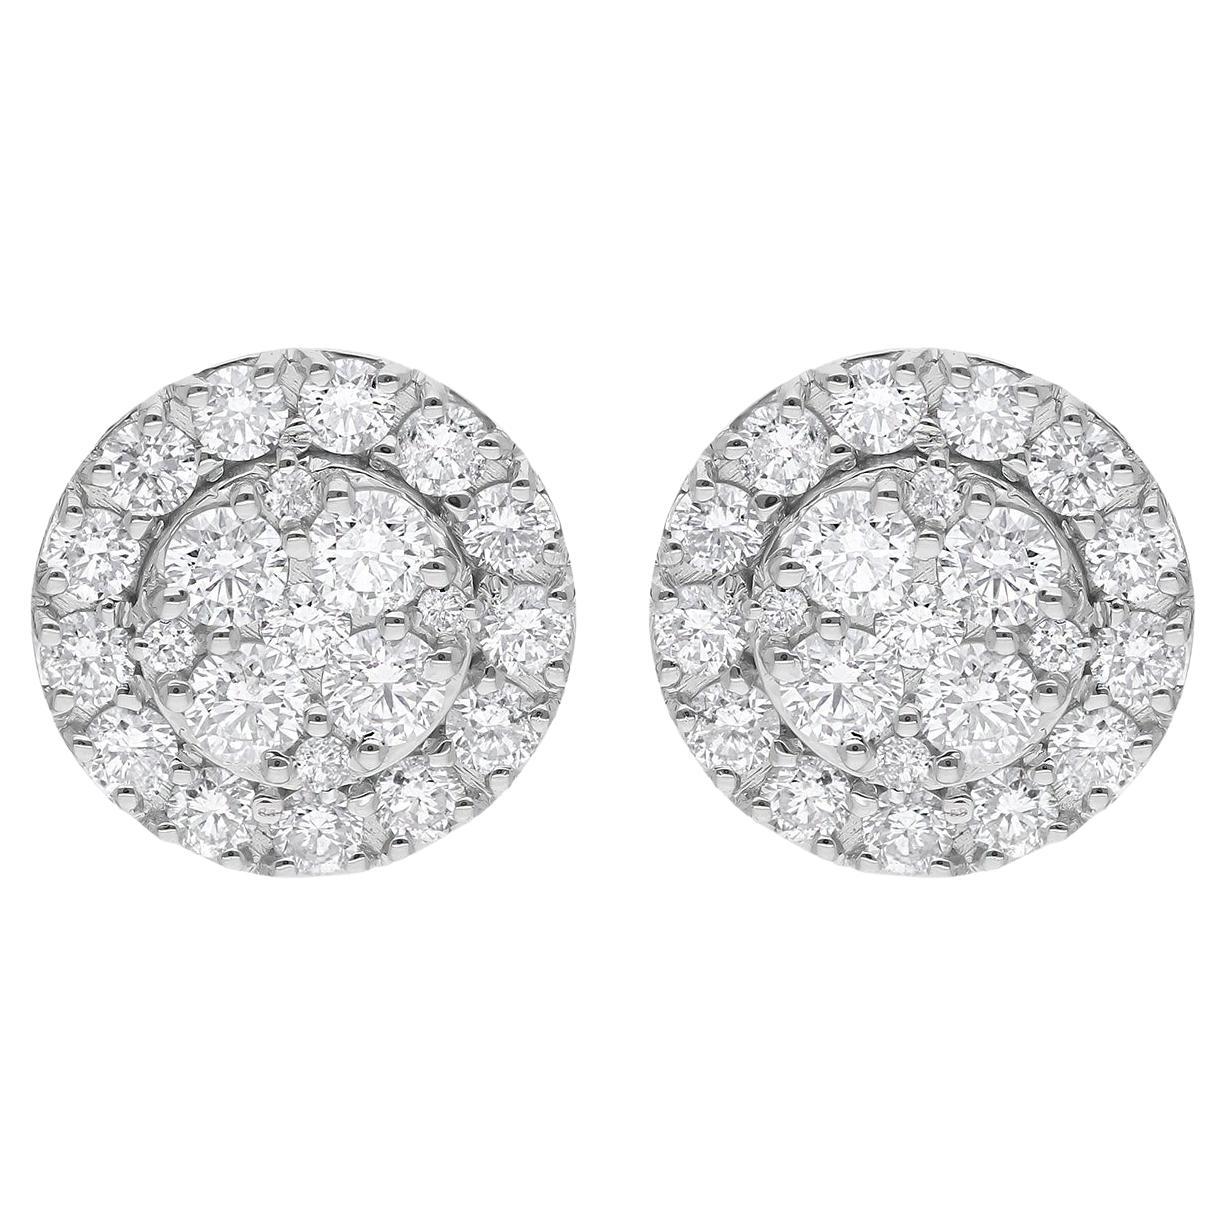 1.97 Carat SI Clarity HI Color Round Diamond Stud Earrings 18 Karat White Gold For Sale